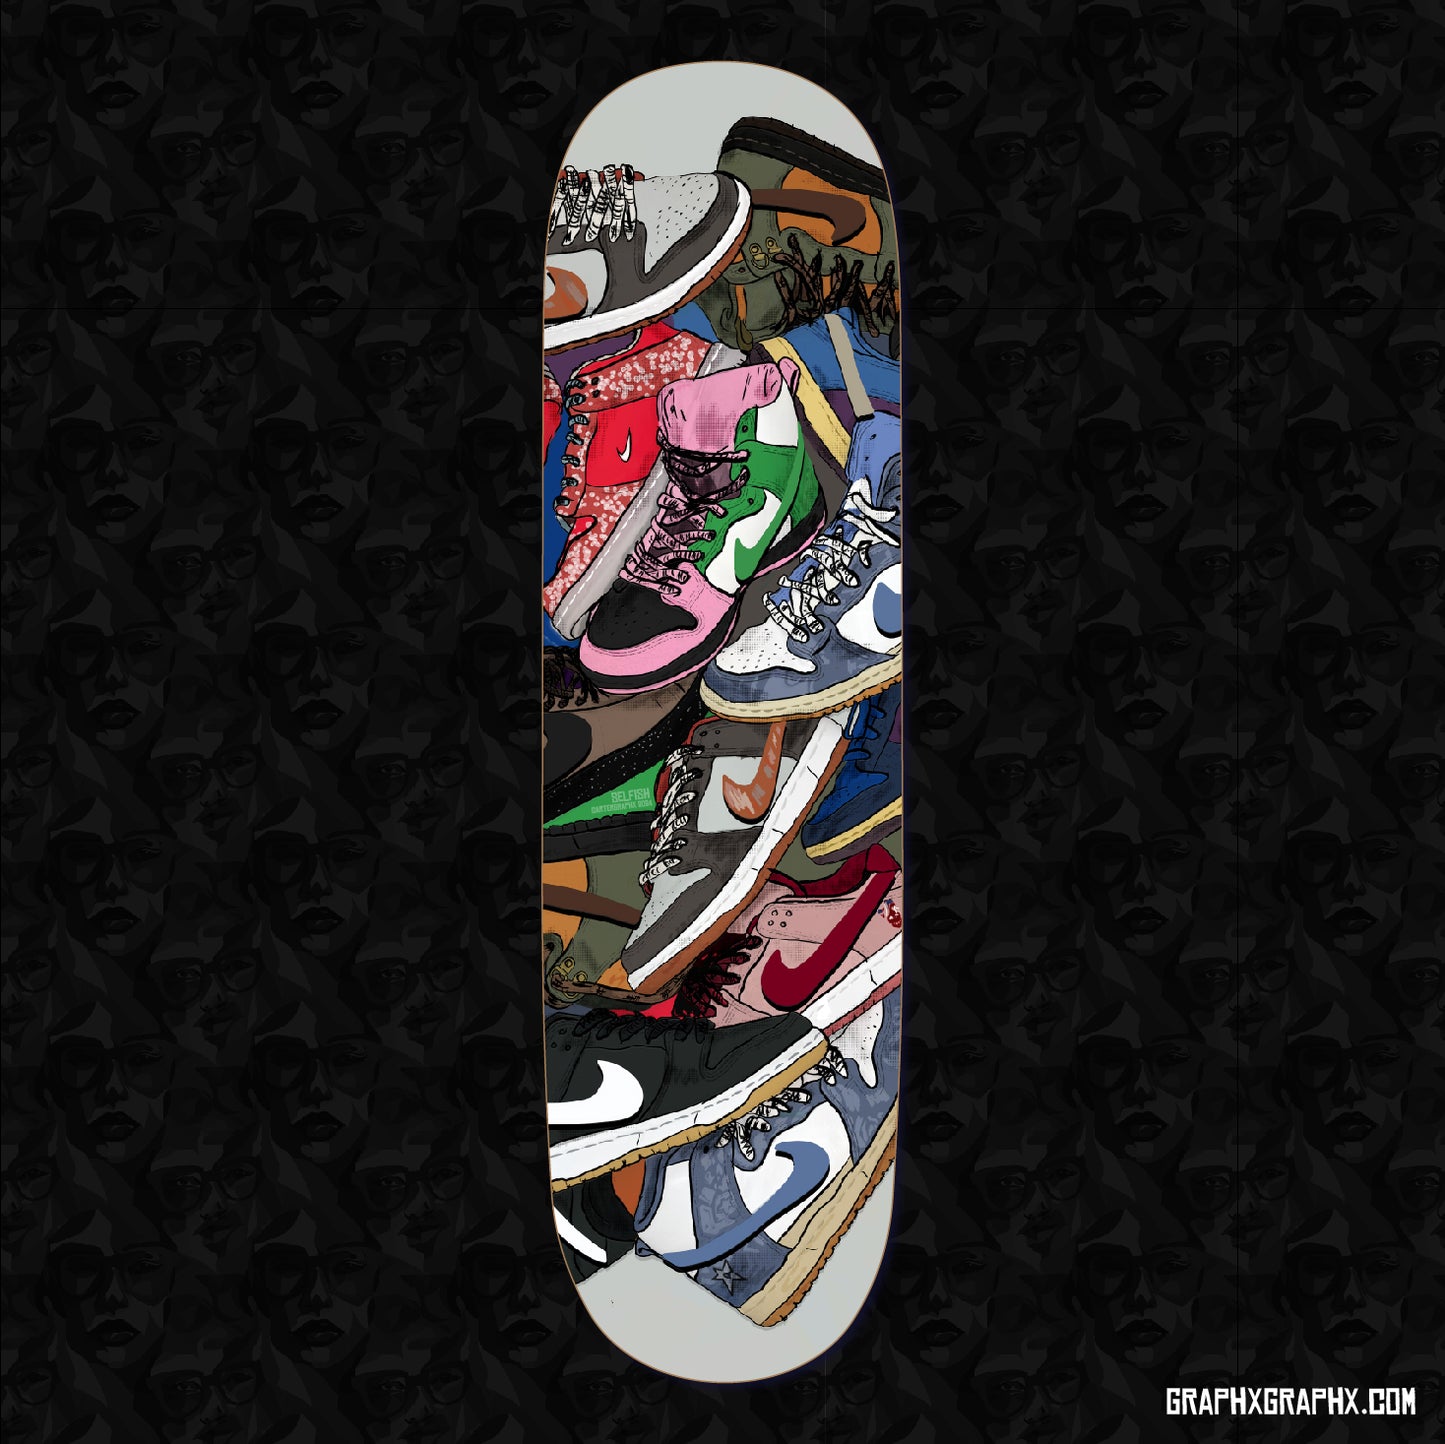 Selfish SB's Everywhere - Limited Edition Skateboard Art Deck. FREE Shipping